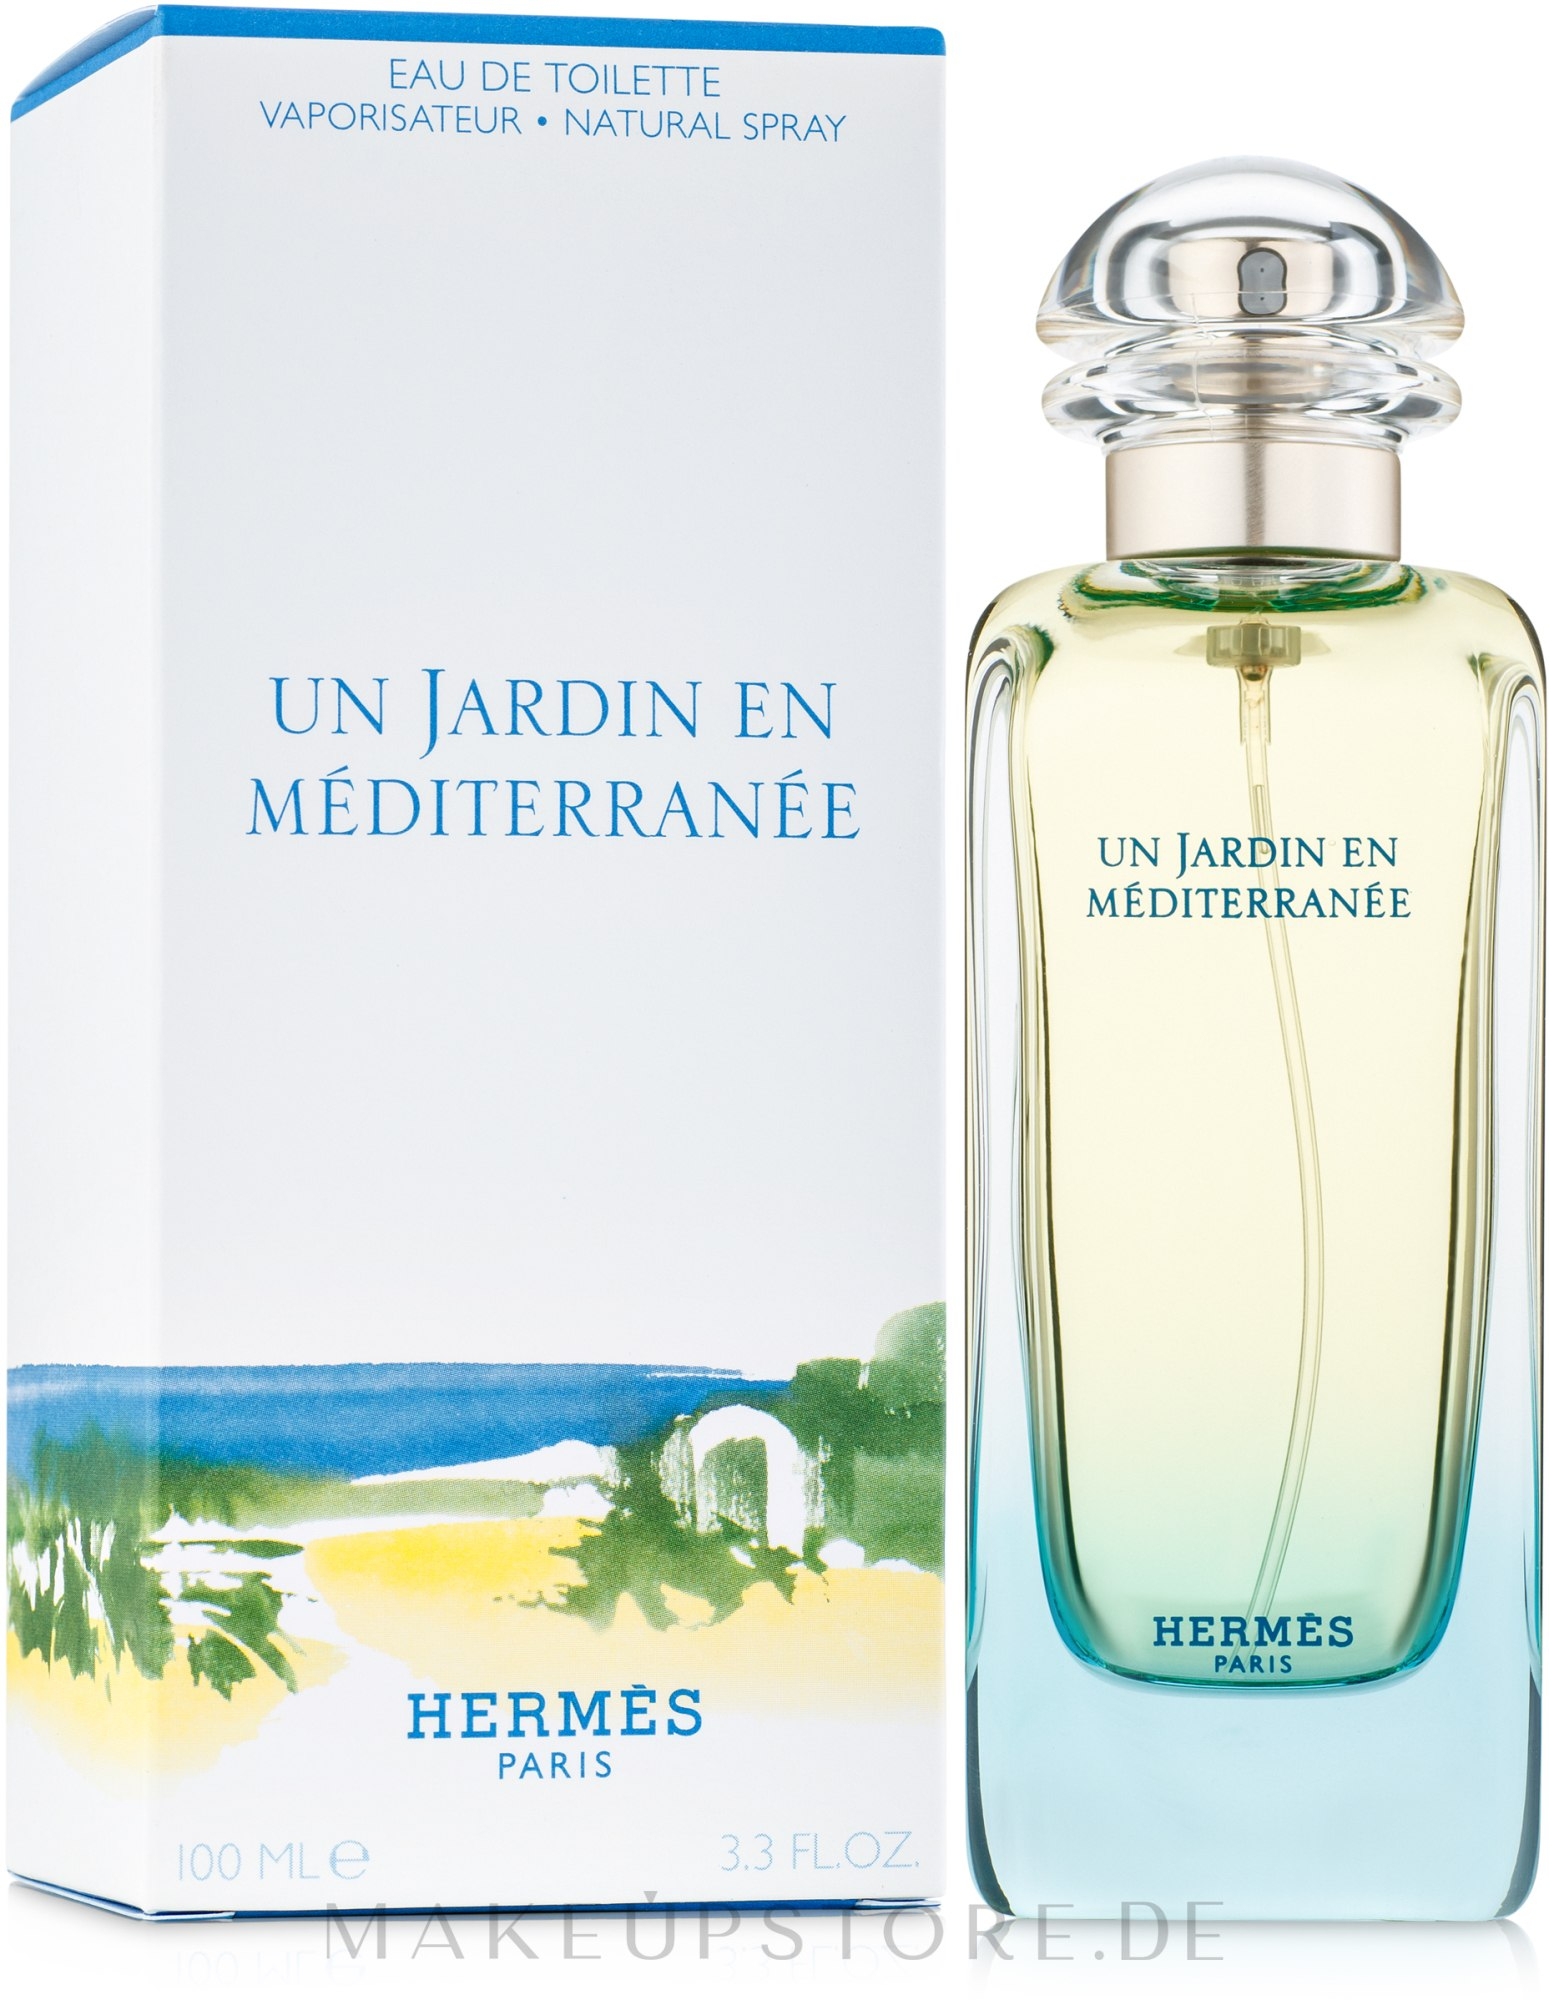 Hermes Un Jardin En Mediterranee - Eau De Toilette | Makeupstore.de tout Hermes Un Jardin En Mediterranee 100Ml Edt Neu